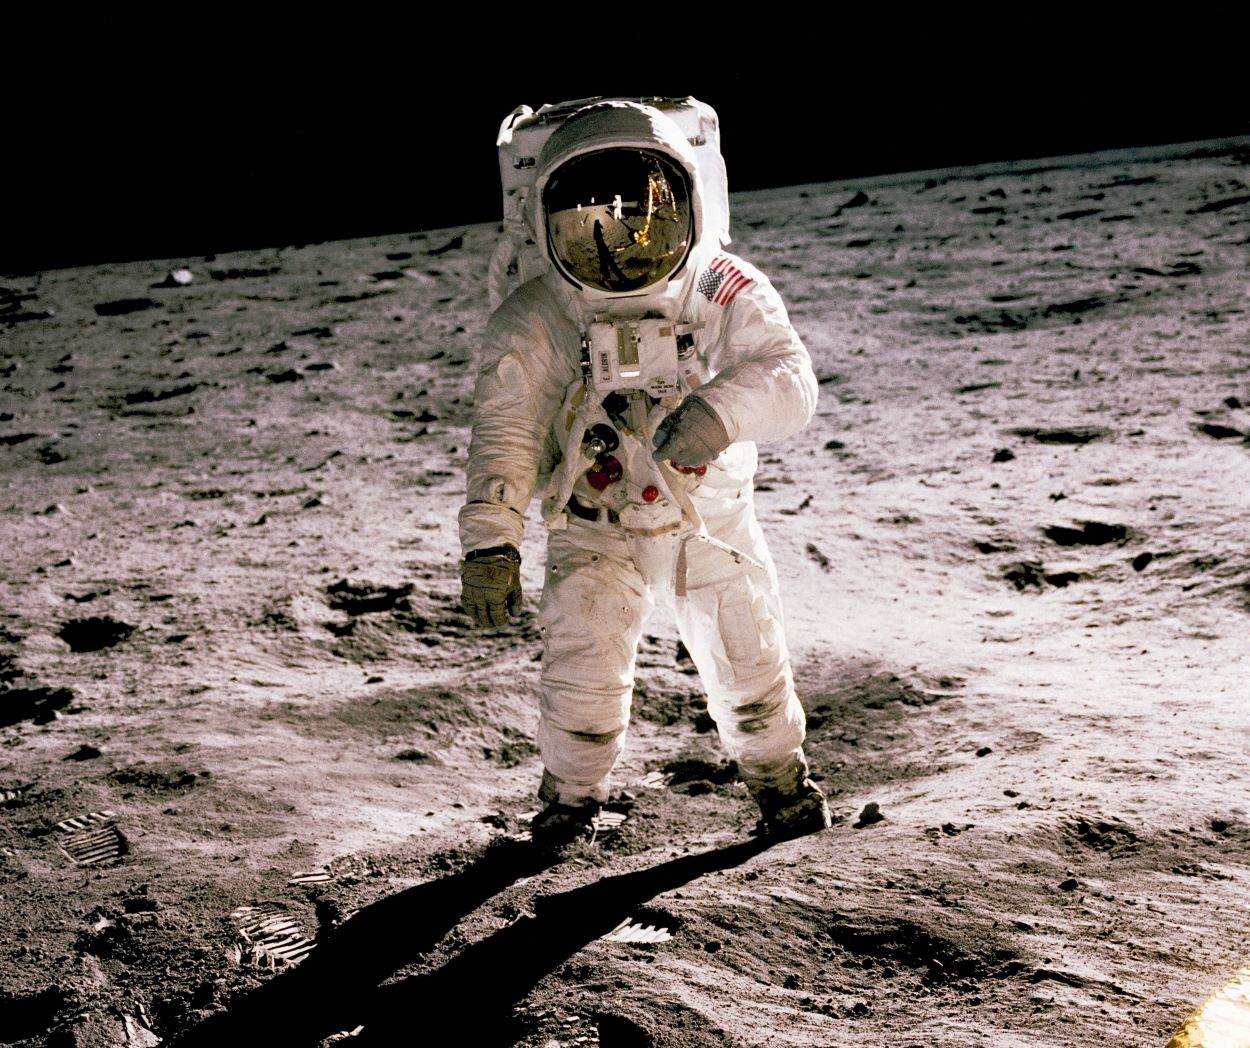 El primer ser humano que camina sobre la superficie de la luna